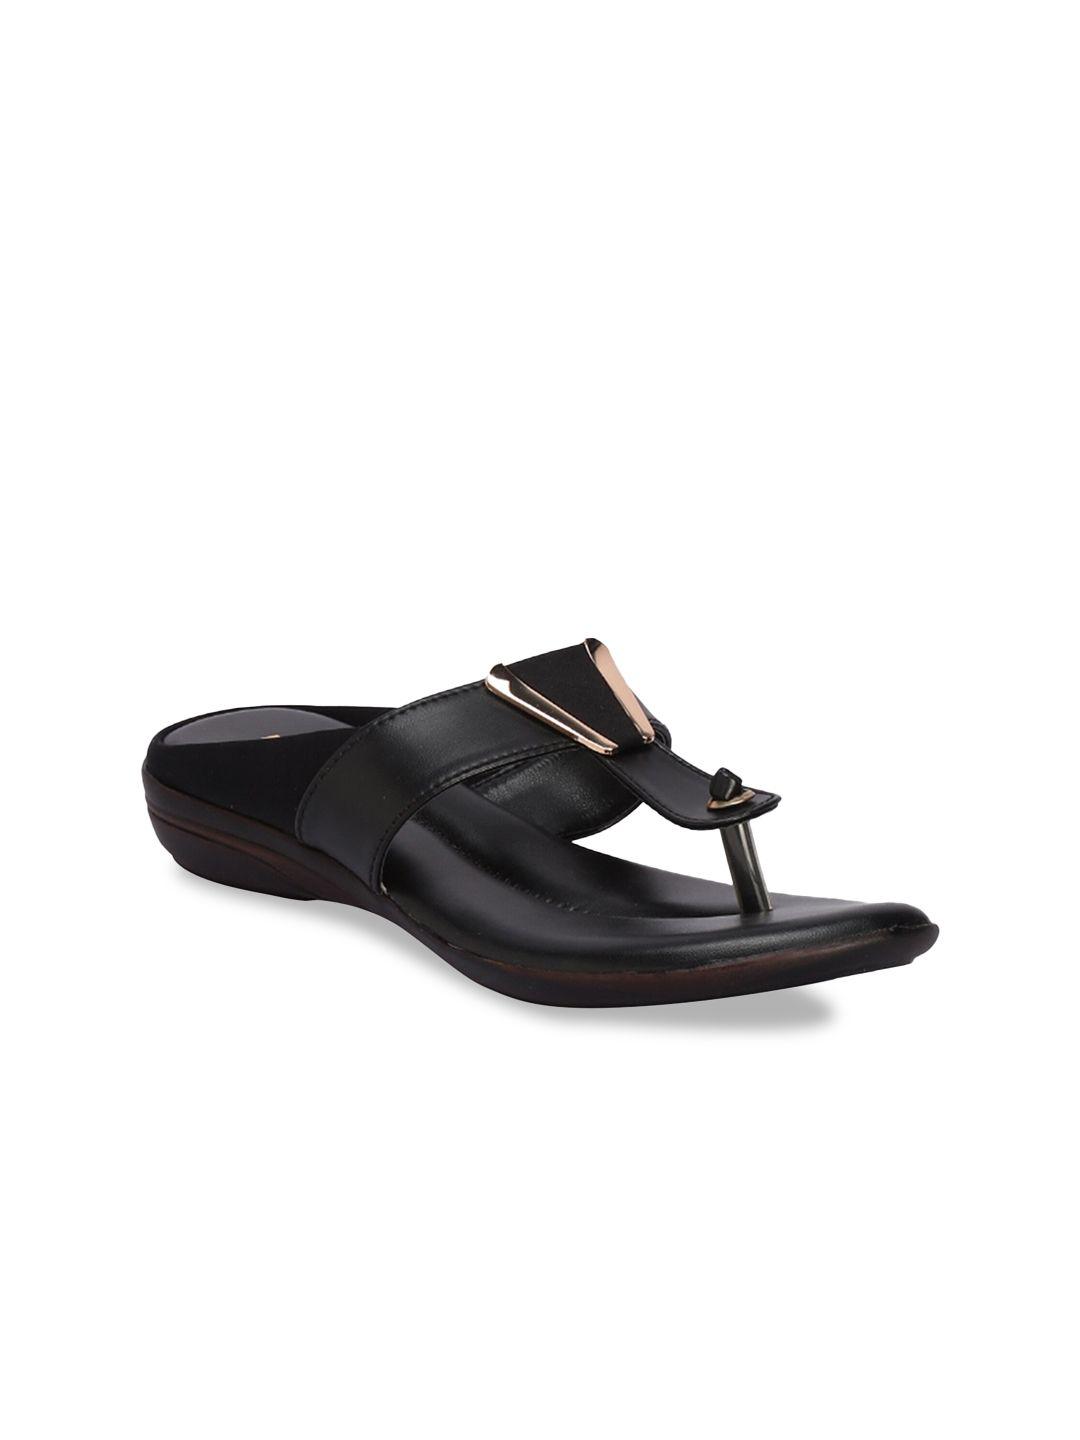 khadims women black comfort sandals